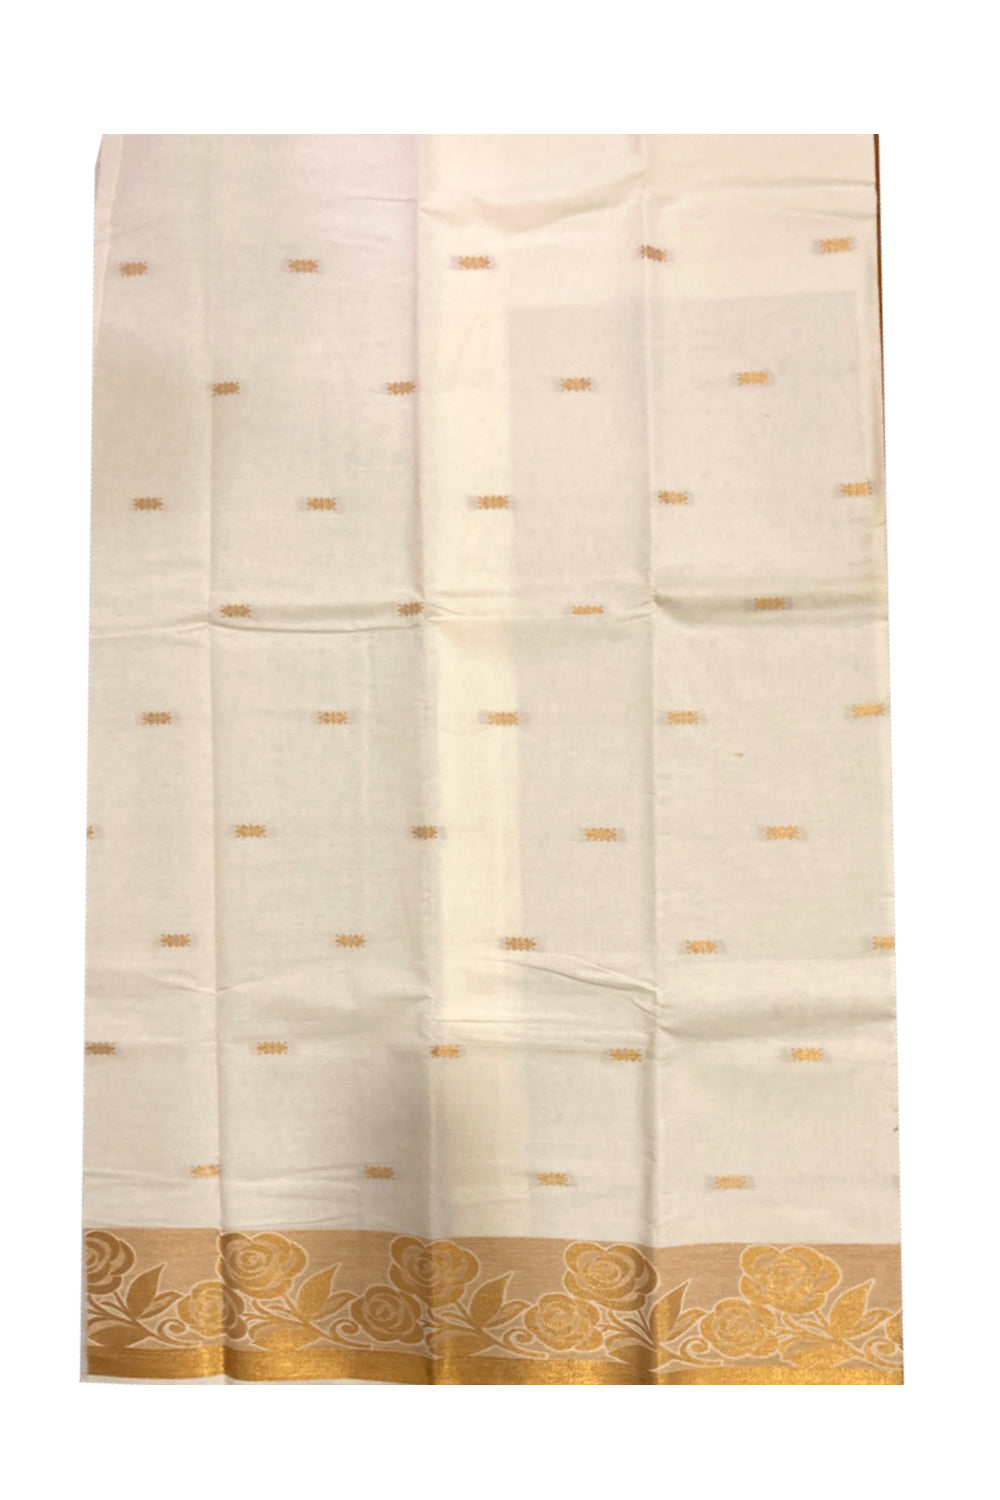 Kerala Cotton Kasavu Churidar Salwar Material with Kasavu Woven Border (include Lines Shawl / Dupatta)